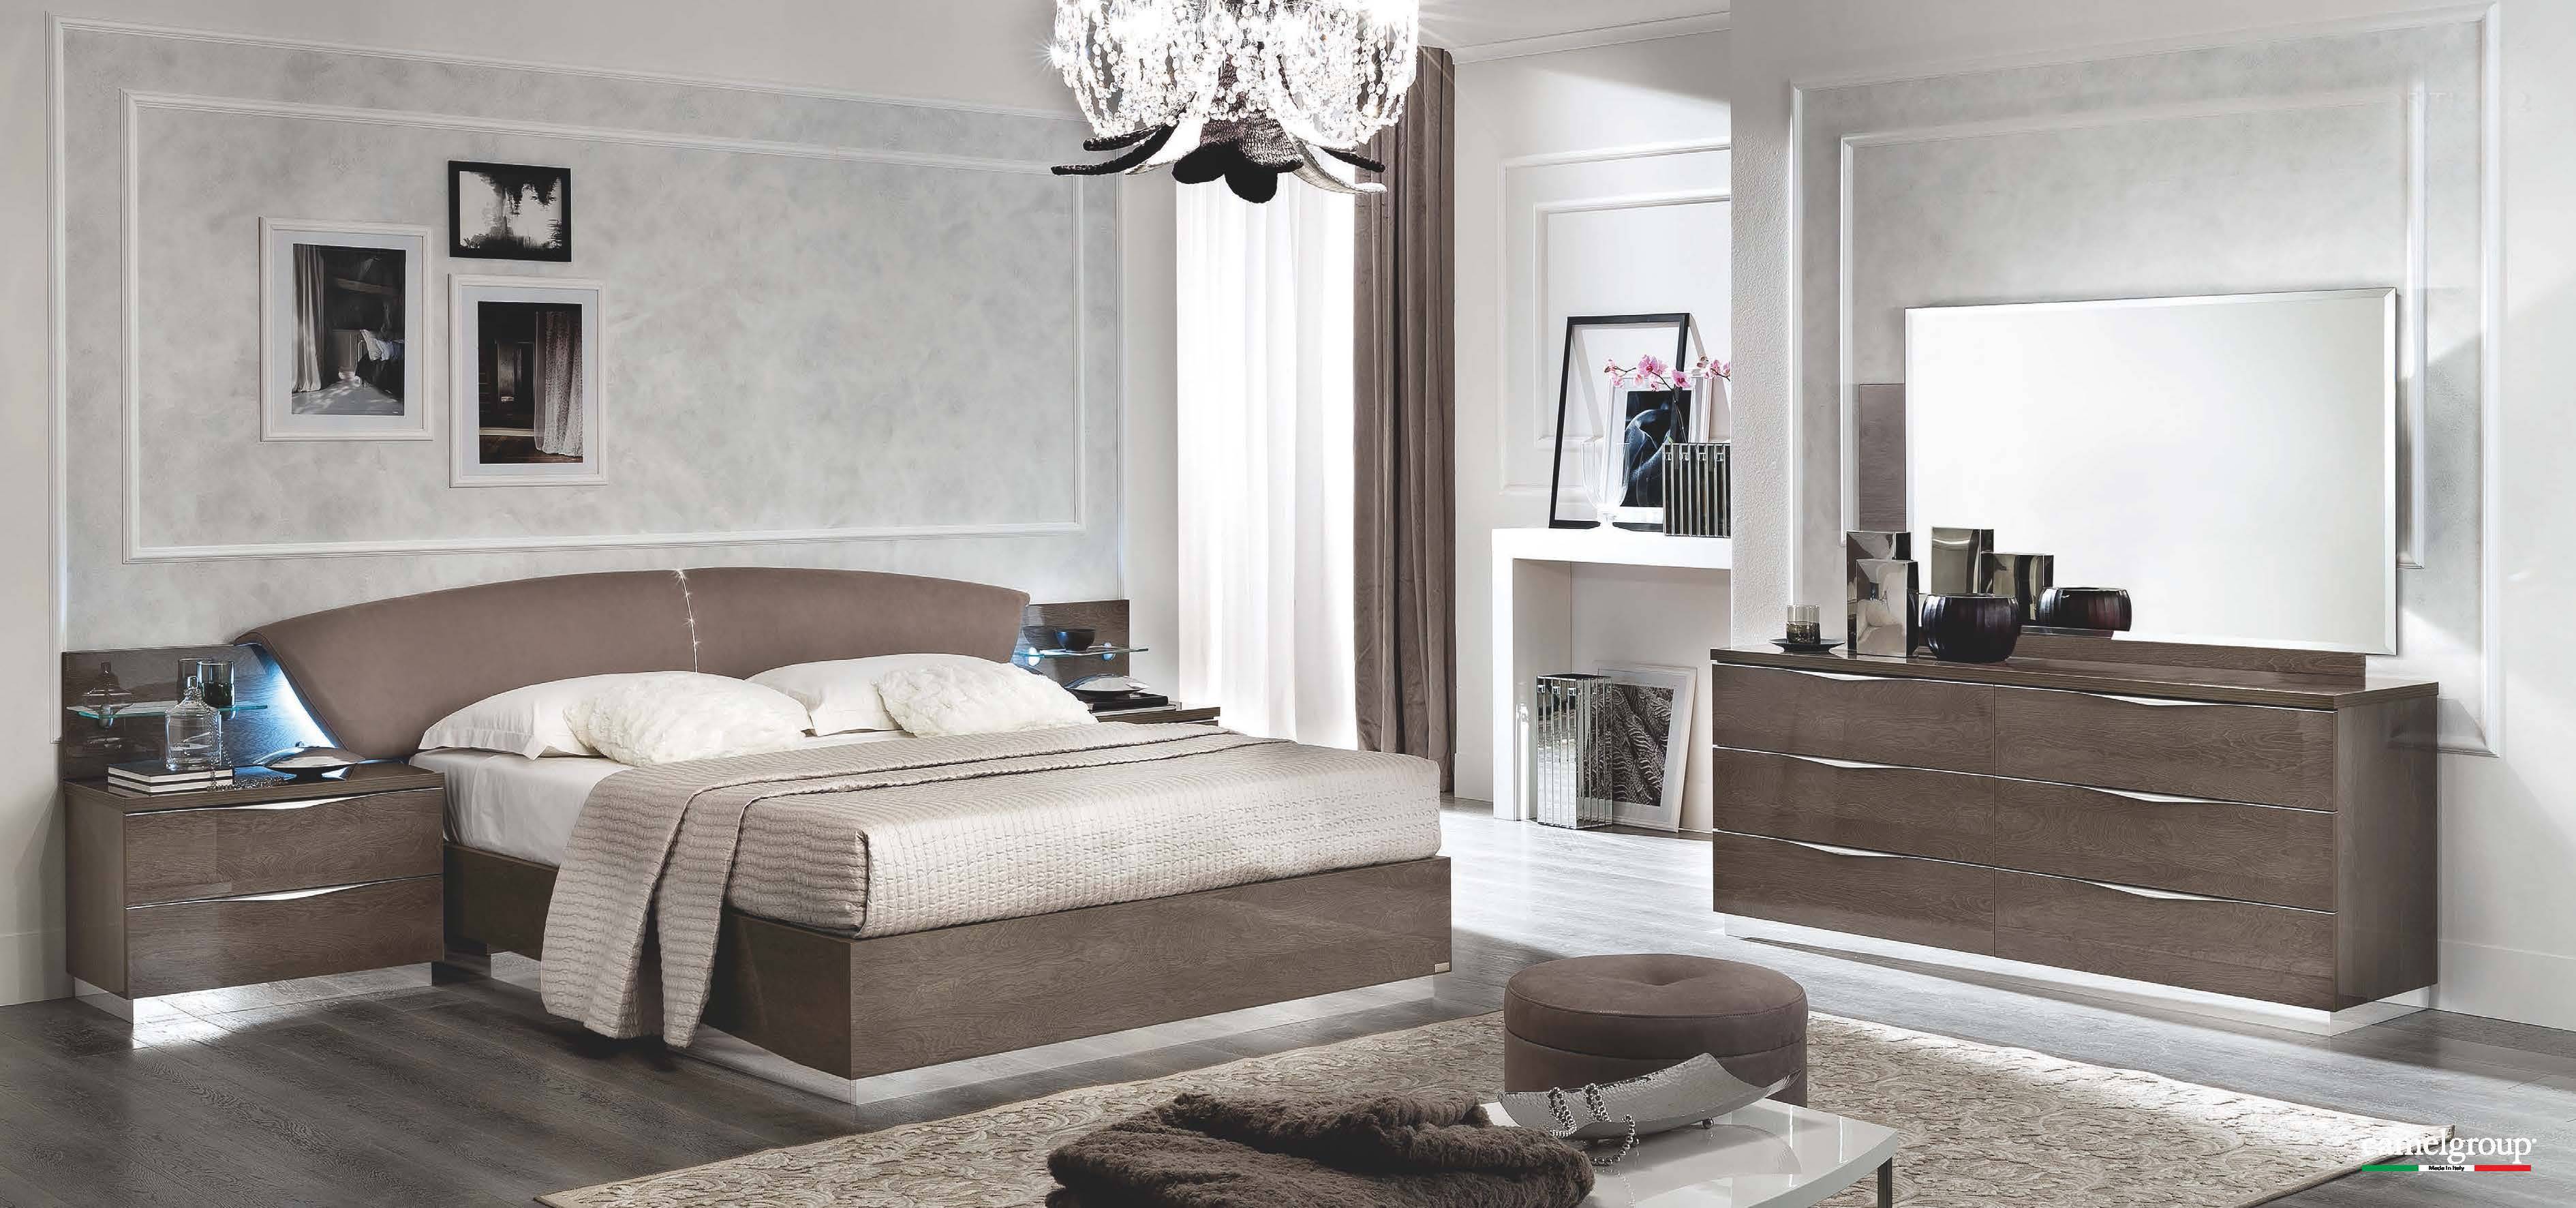 The Best Ideas For Italian Bedroom Set Best Interior Decor